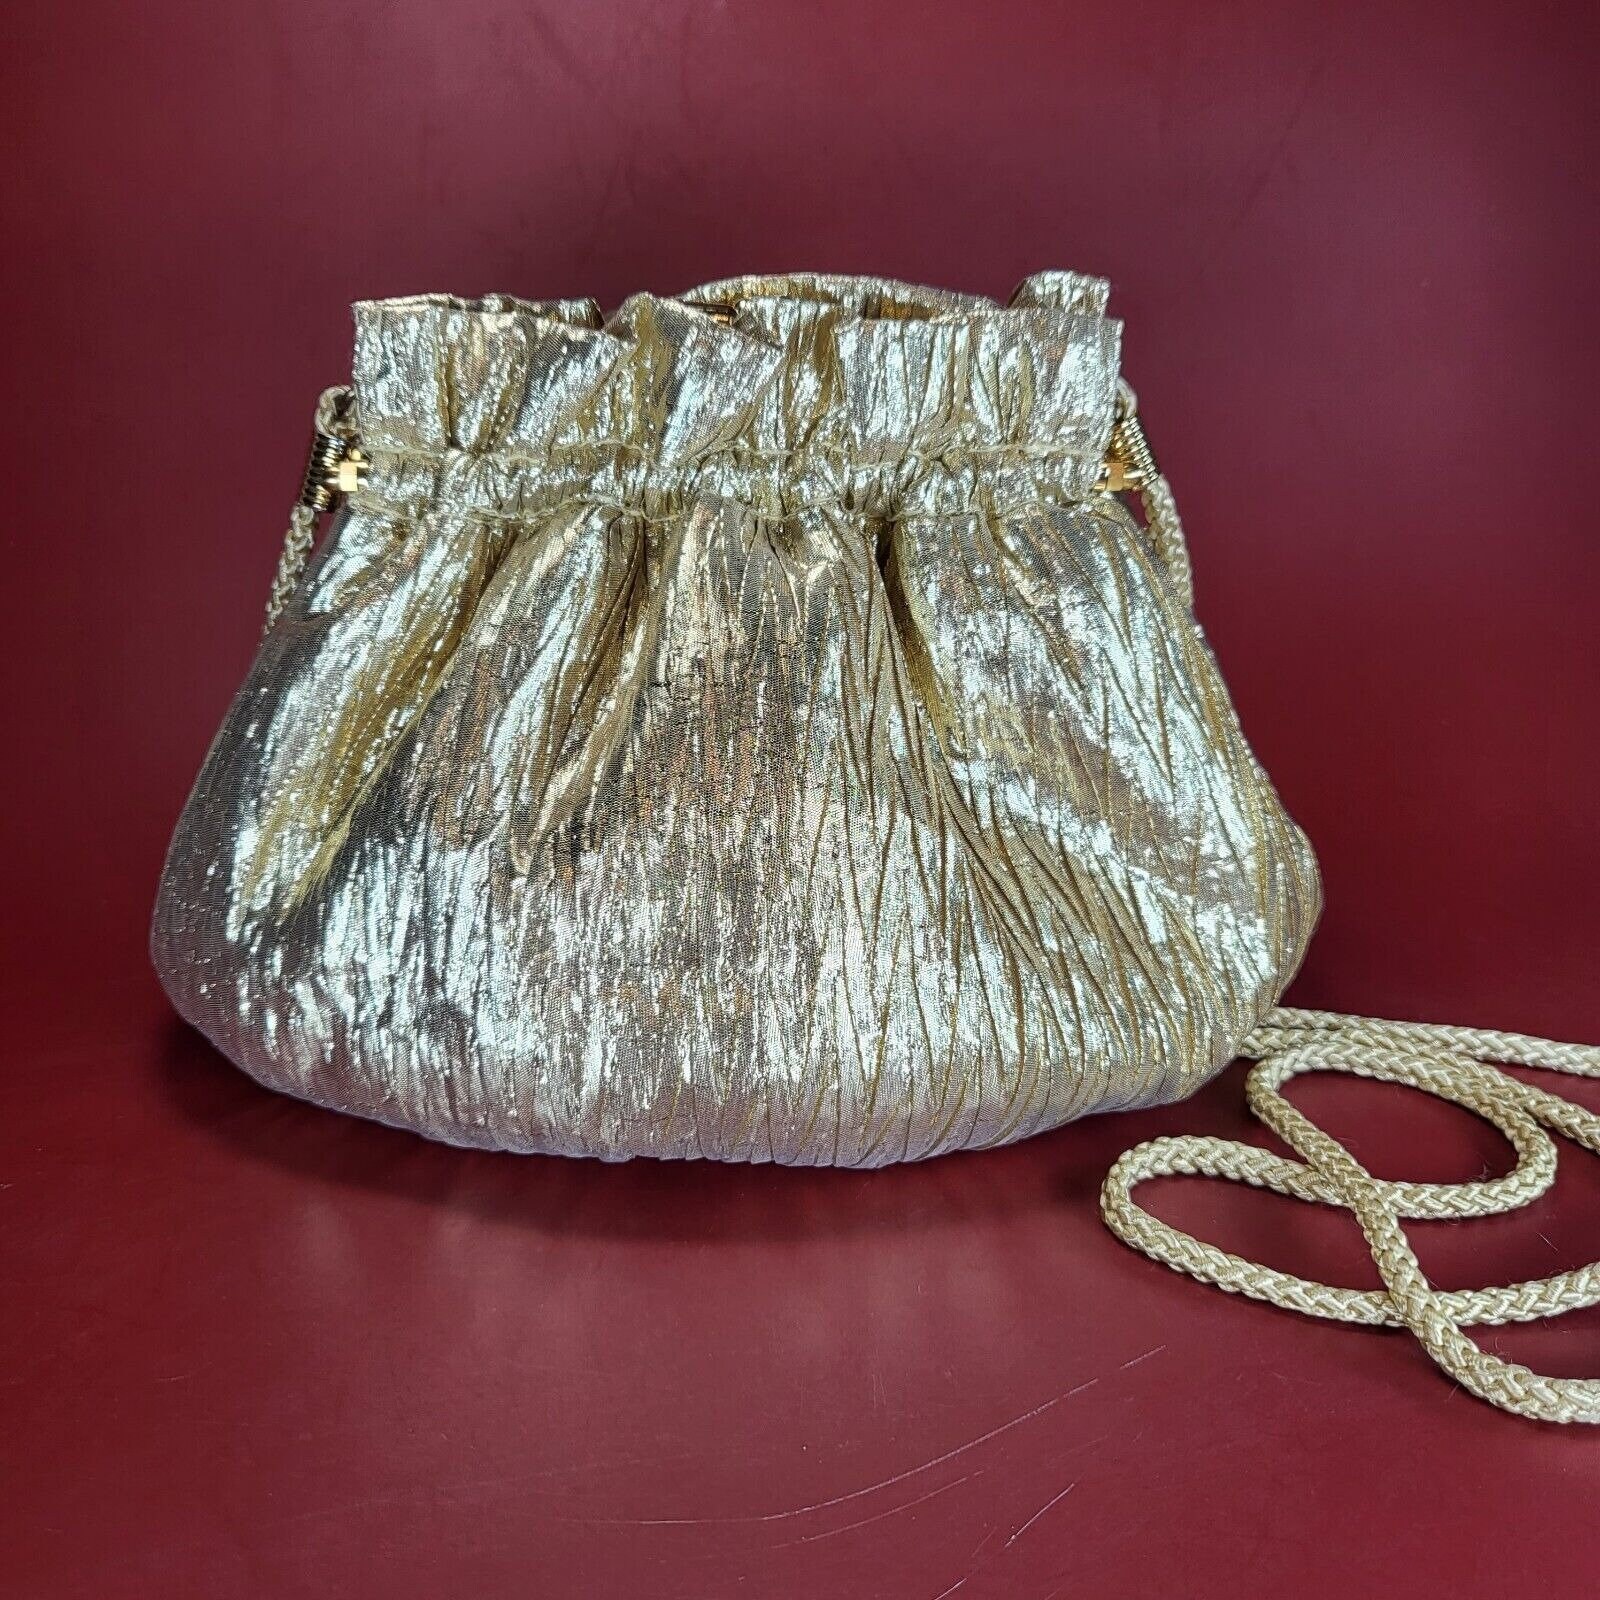 La Regale Lux Gold Metallic Kiss Lock Handbag Evening Bag Pouch Purse Clutch